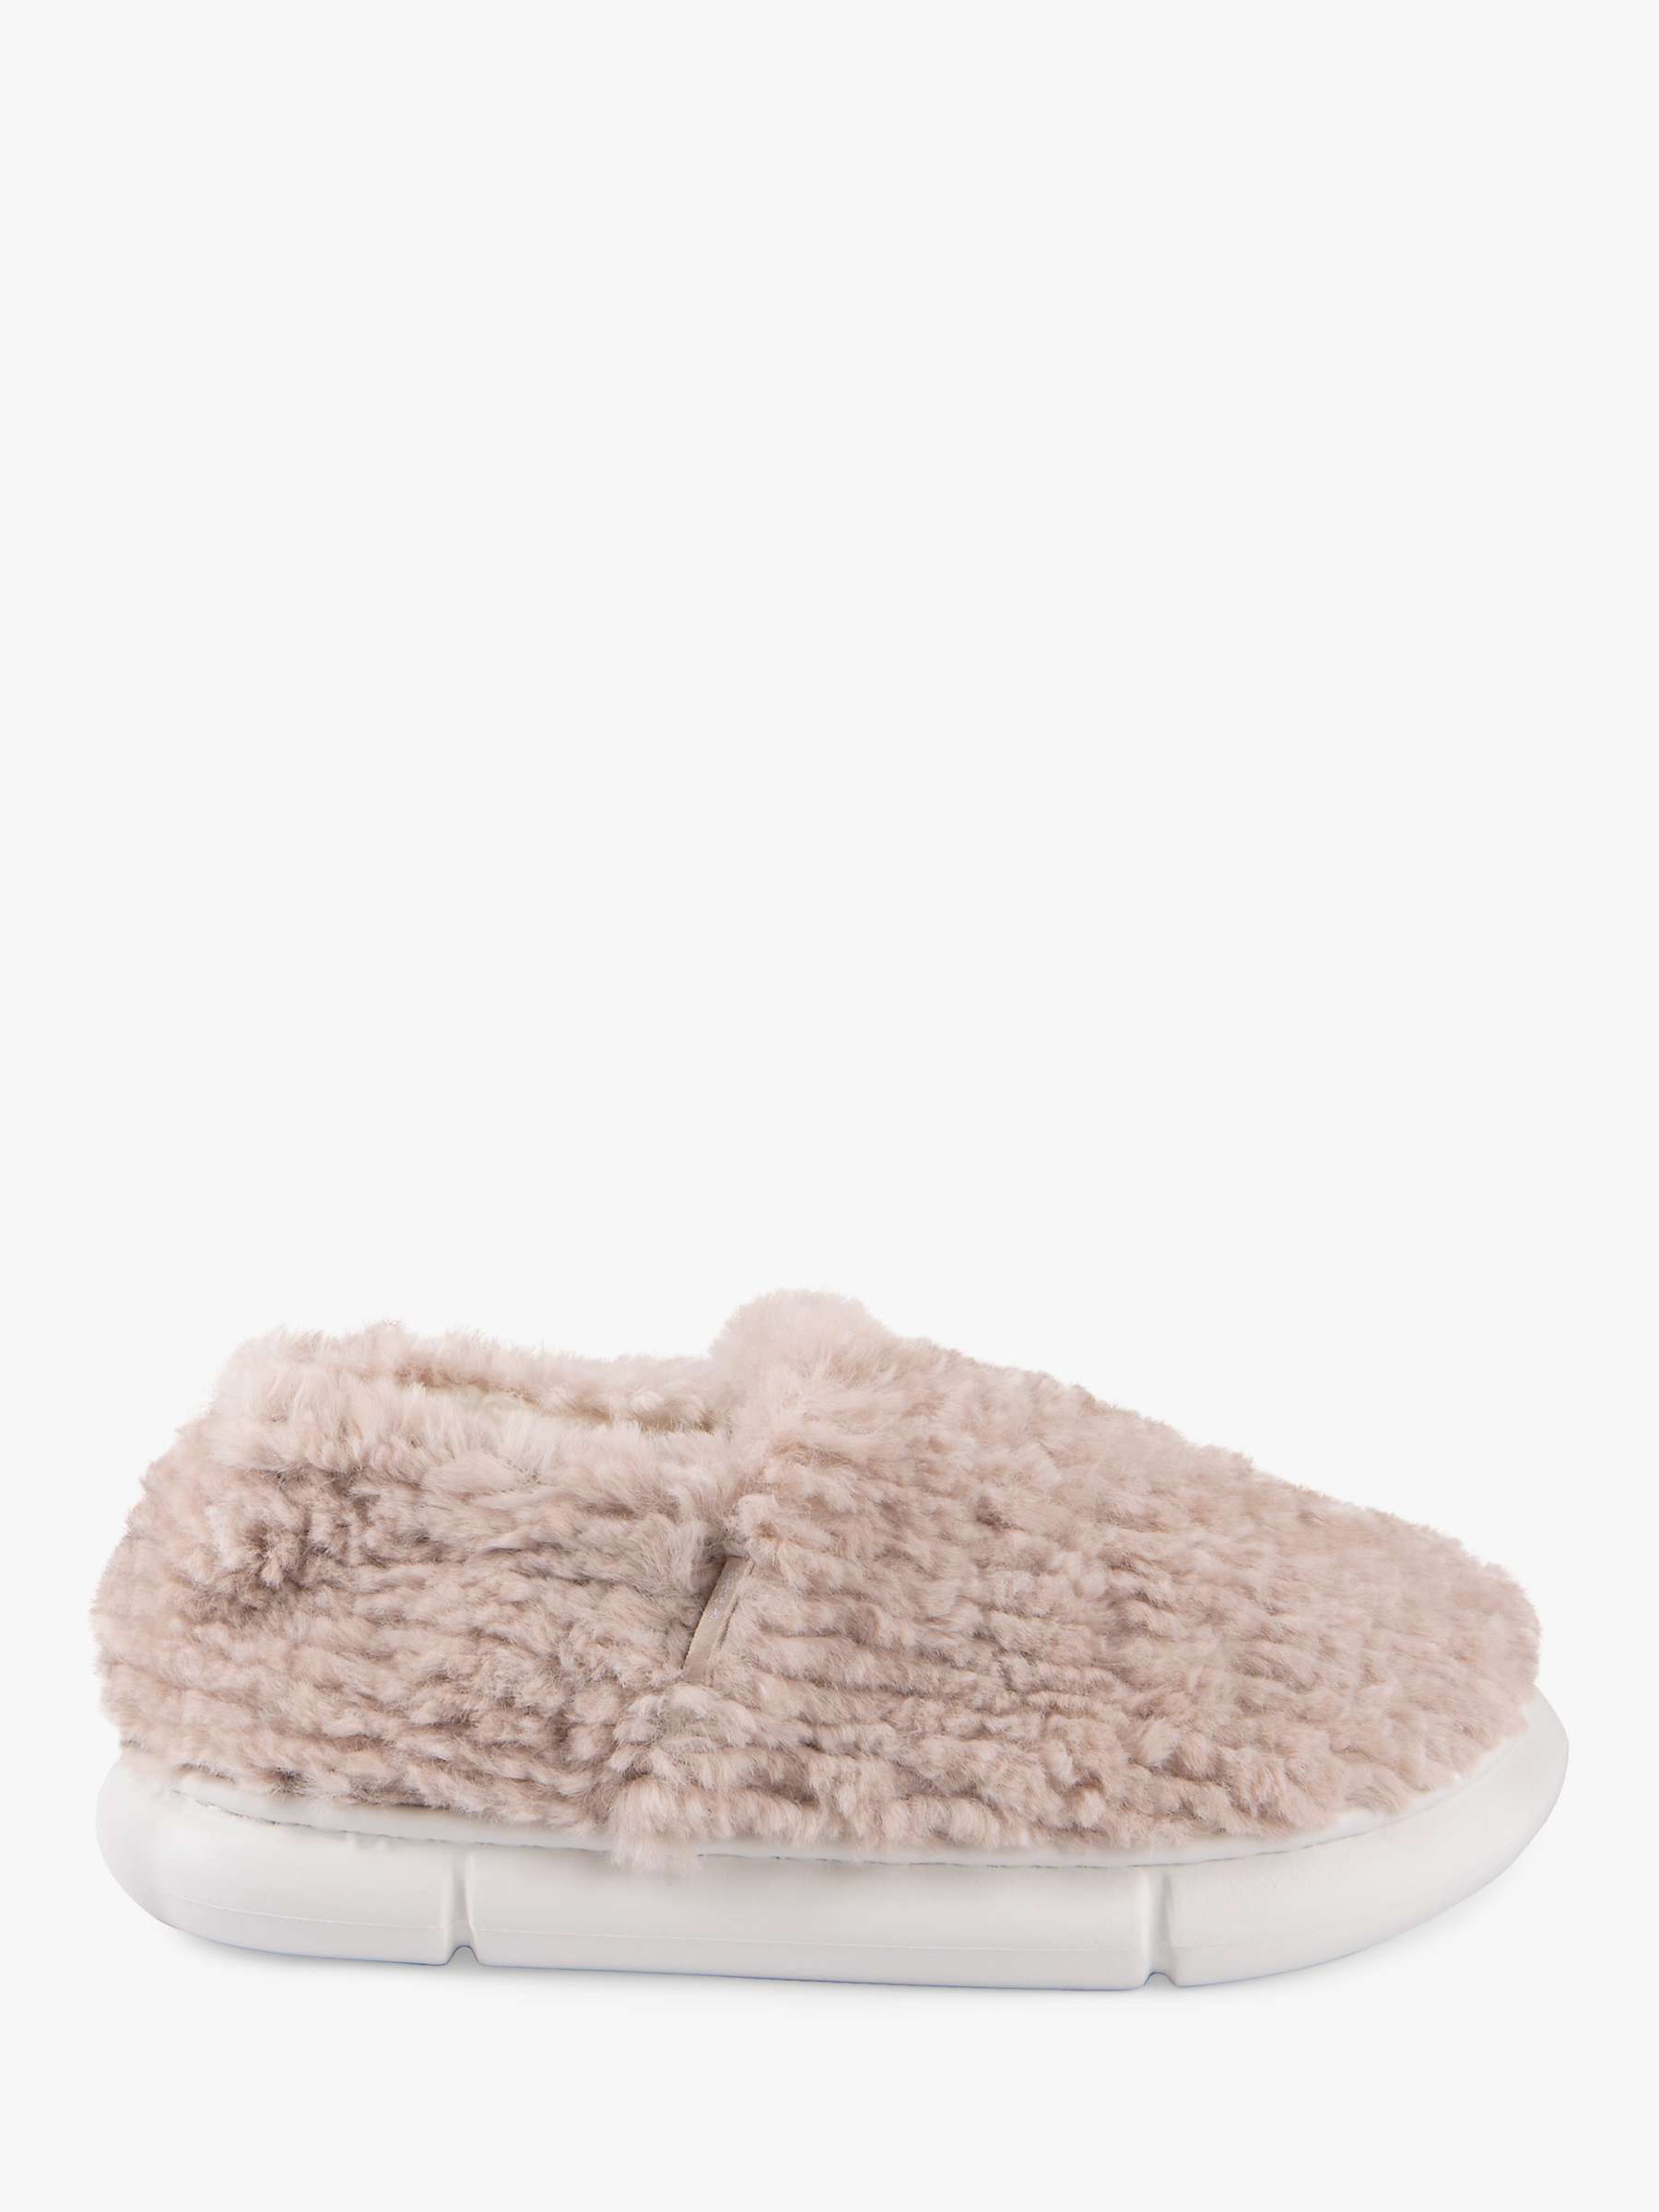 Buy totes Eva Cloud Textured Faux Fur Slippers Online at johnlewis.com